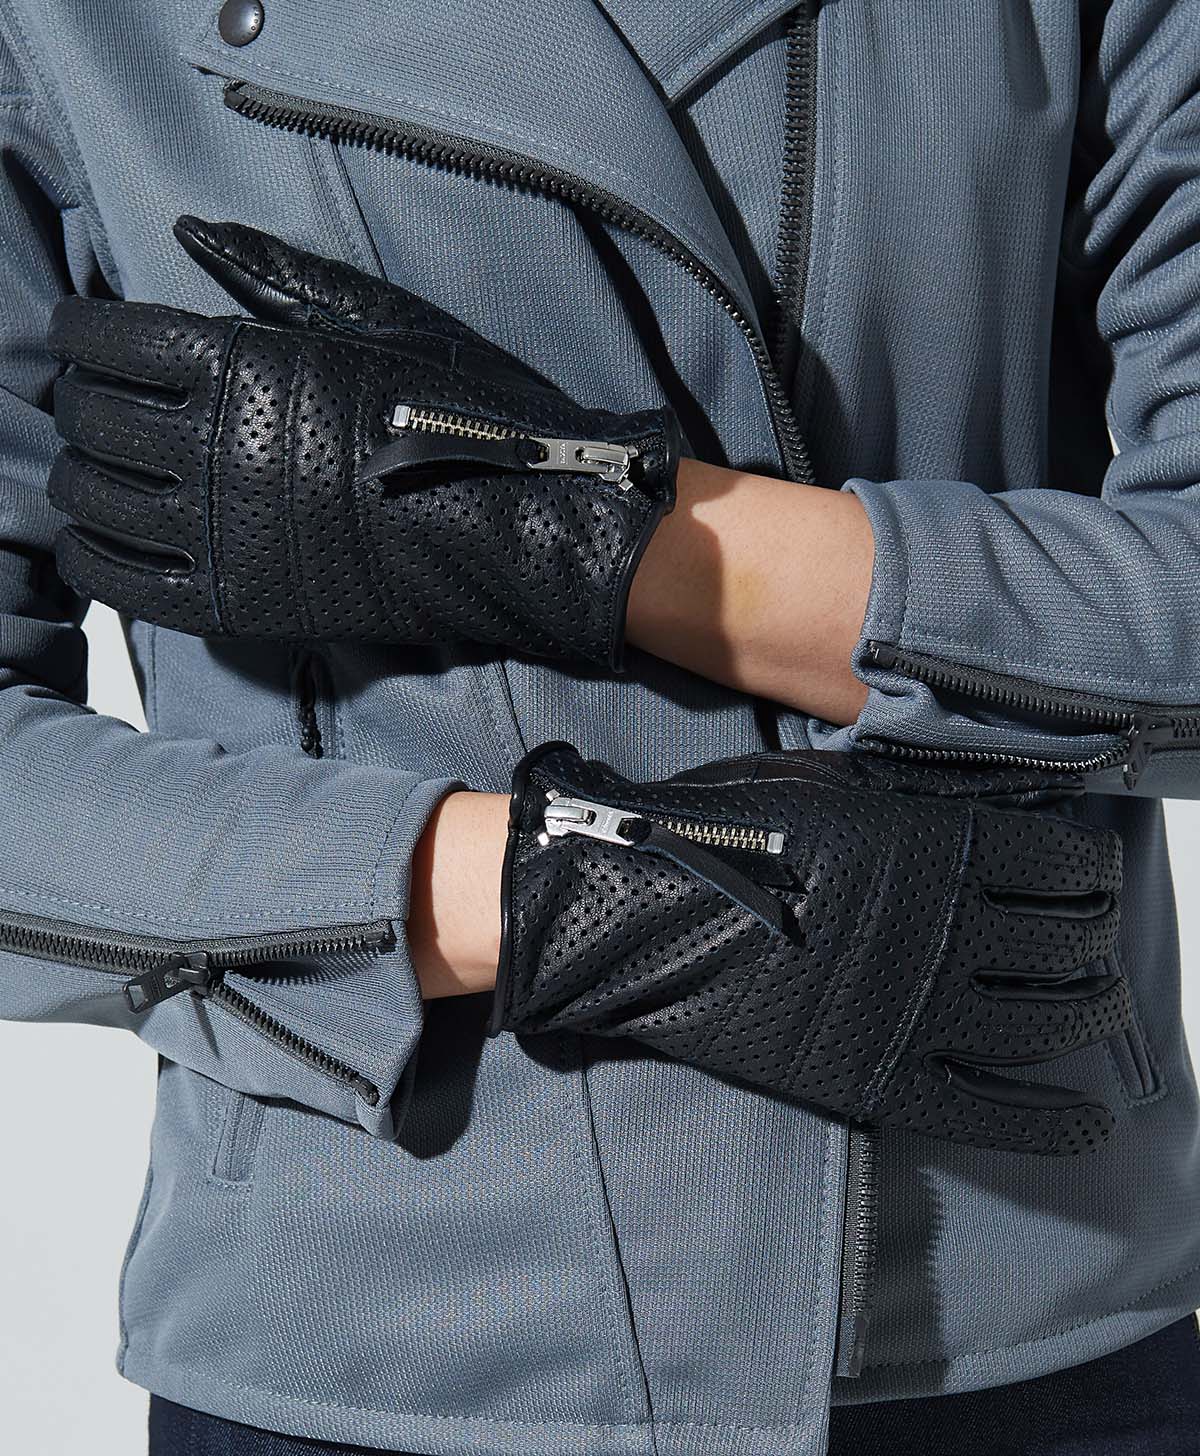 Rox Glove -Pl / Black (Women's)